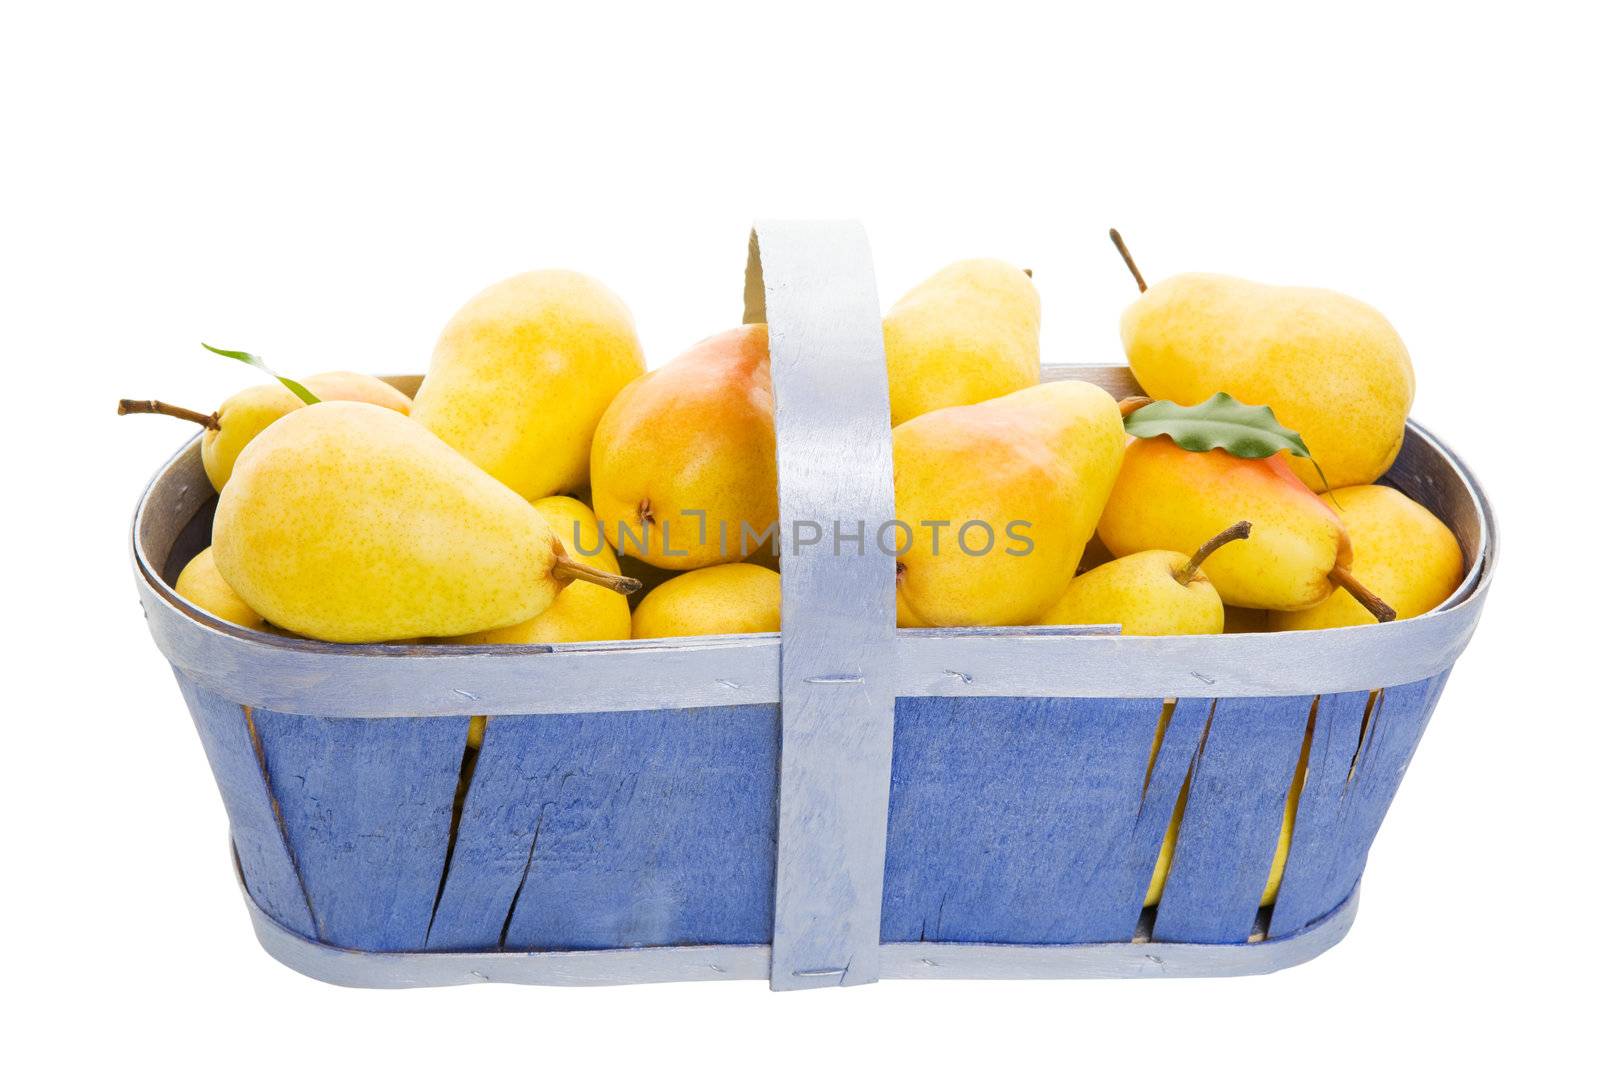 Freshly picked Bartlett pears in a periwinkle blue basket.  